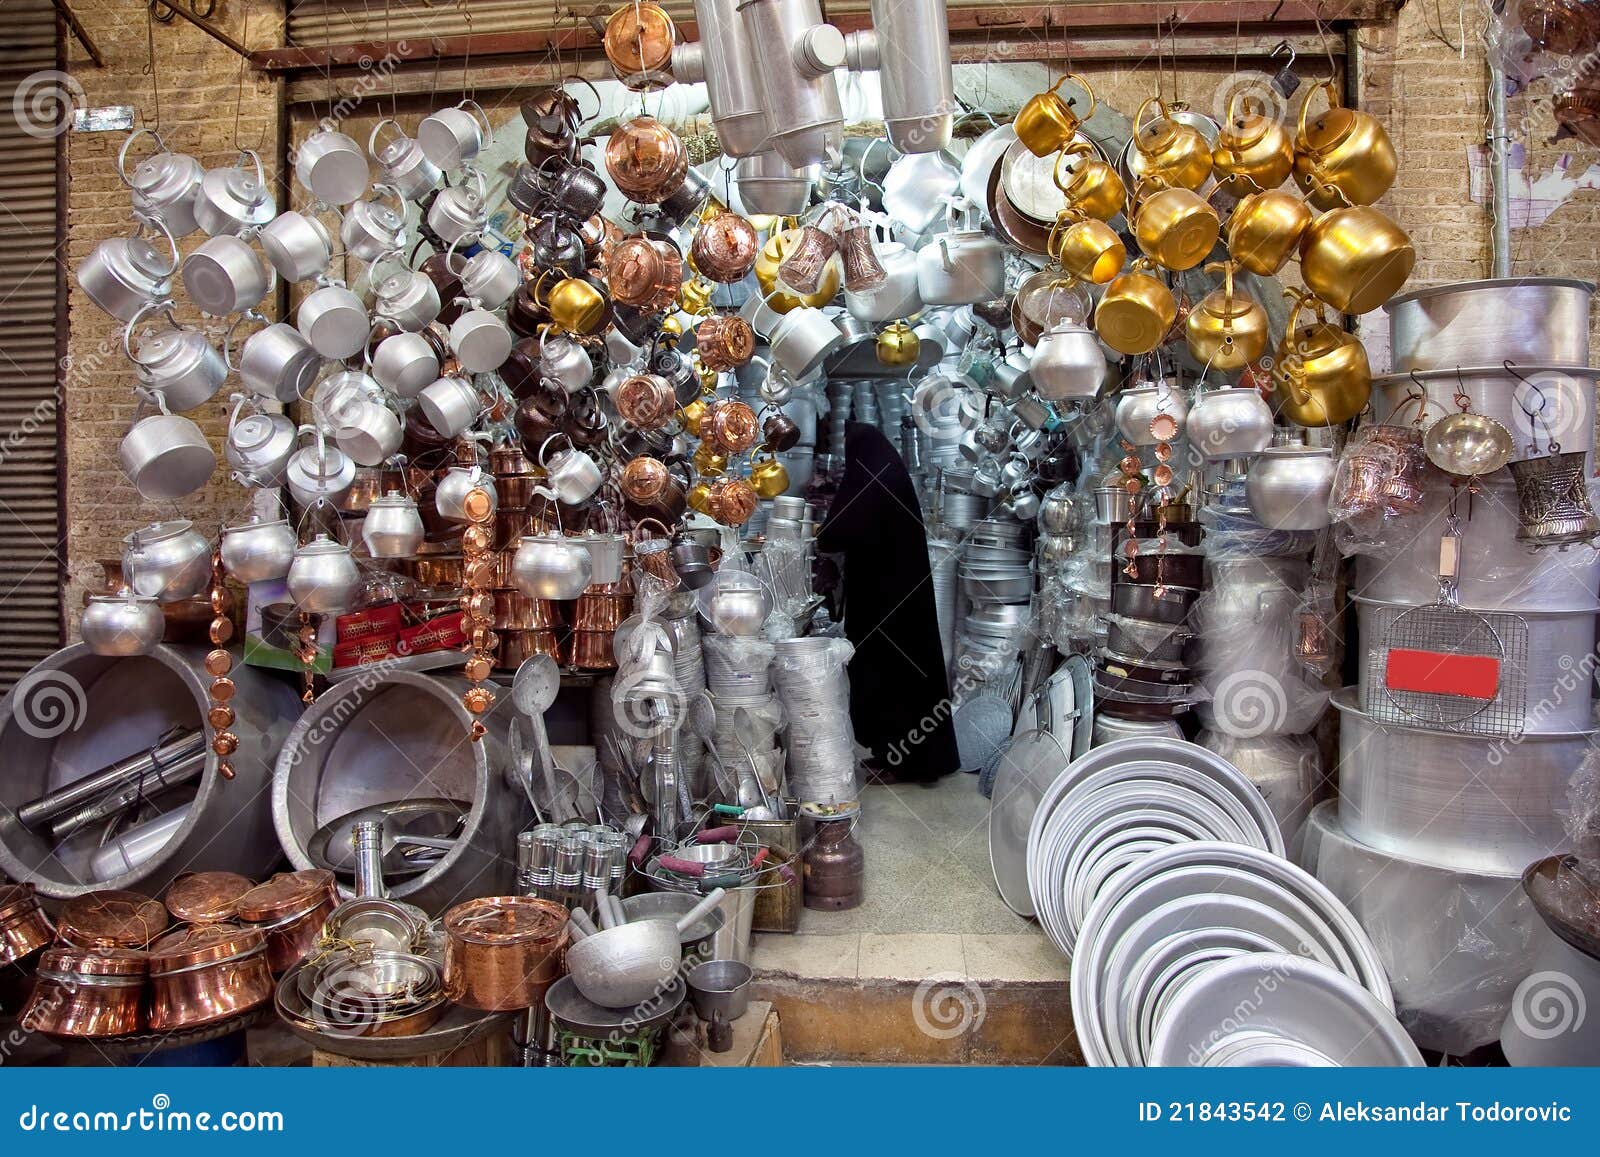 pots store in old bazar